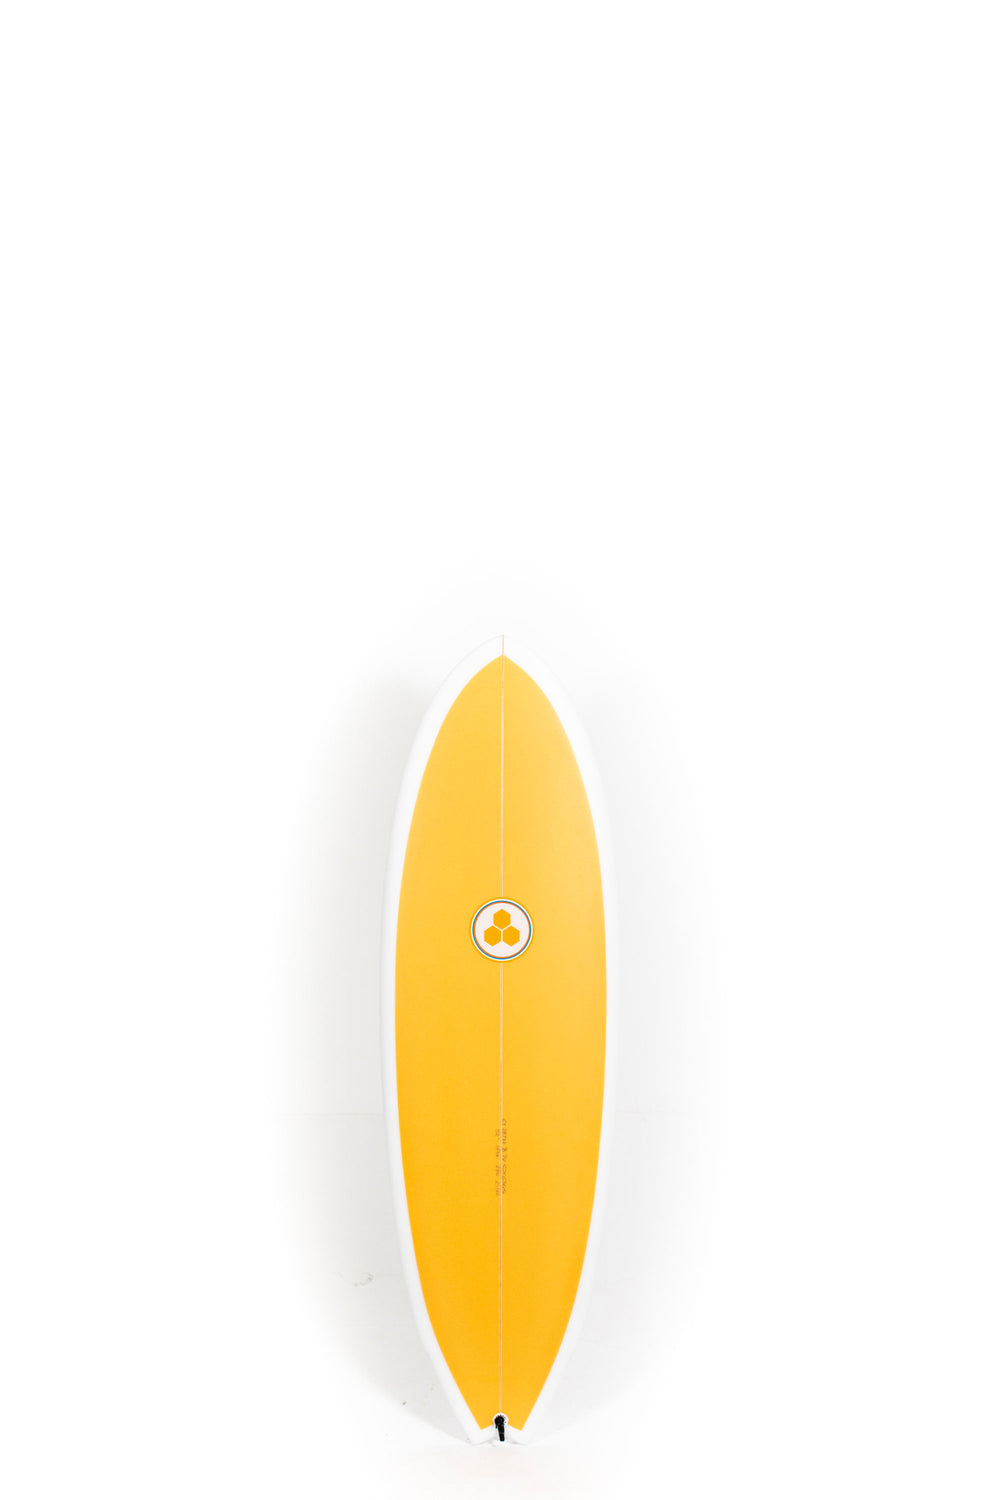 Pukas Surf Shop - Channel Islands - G-Skate by Al Merrick - 5'2